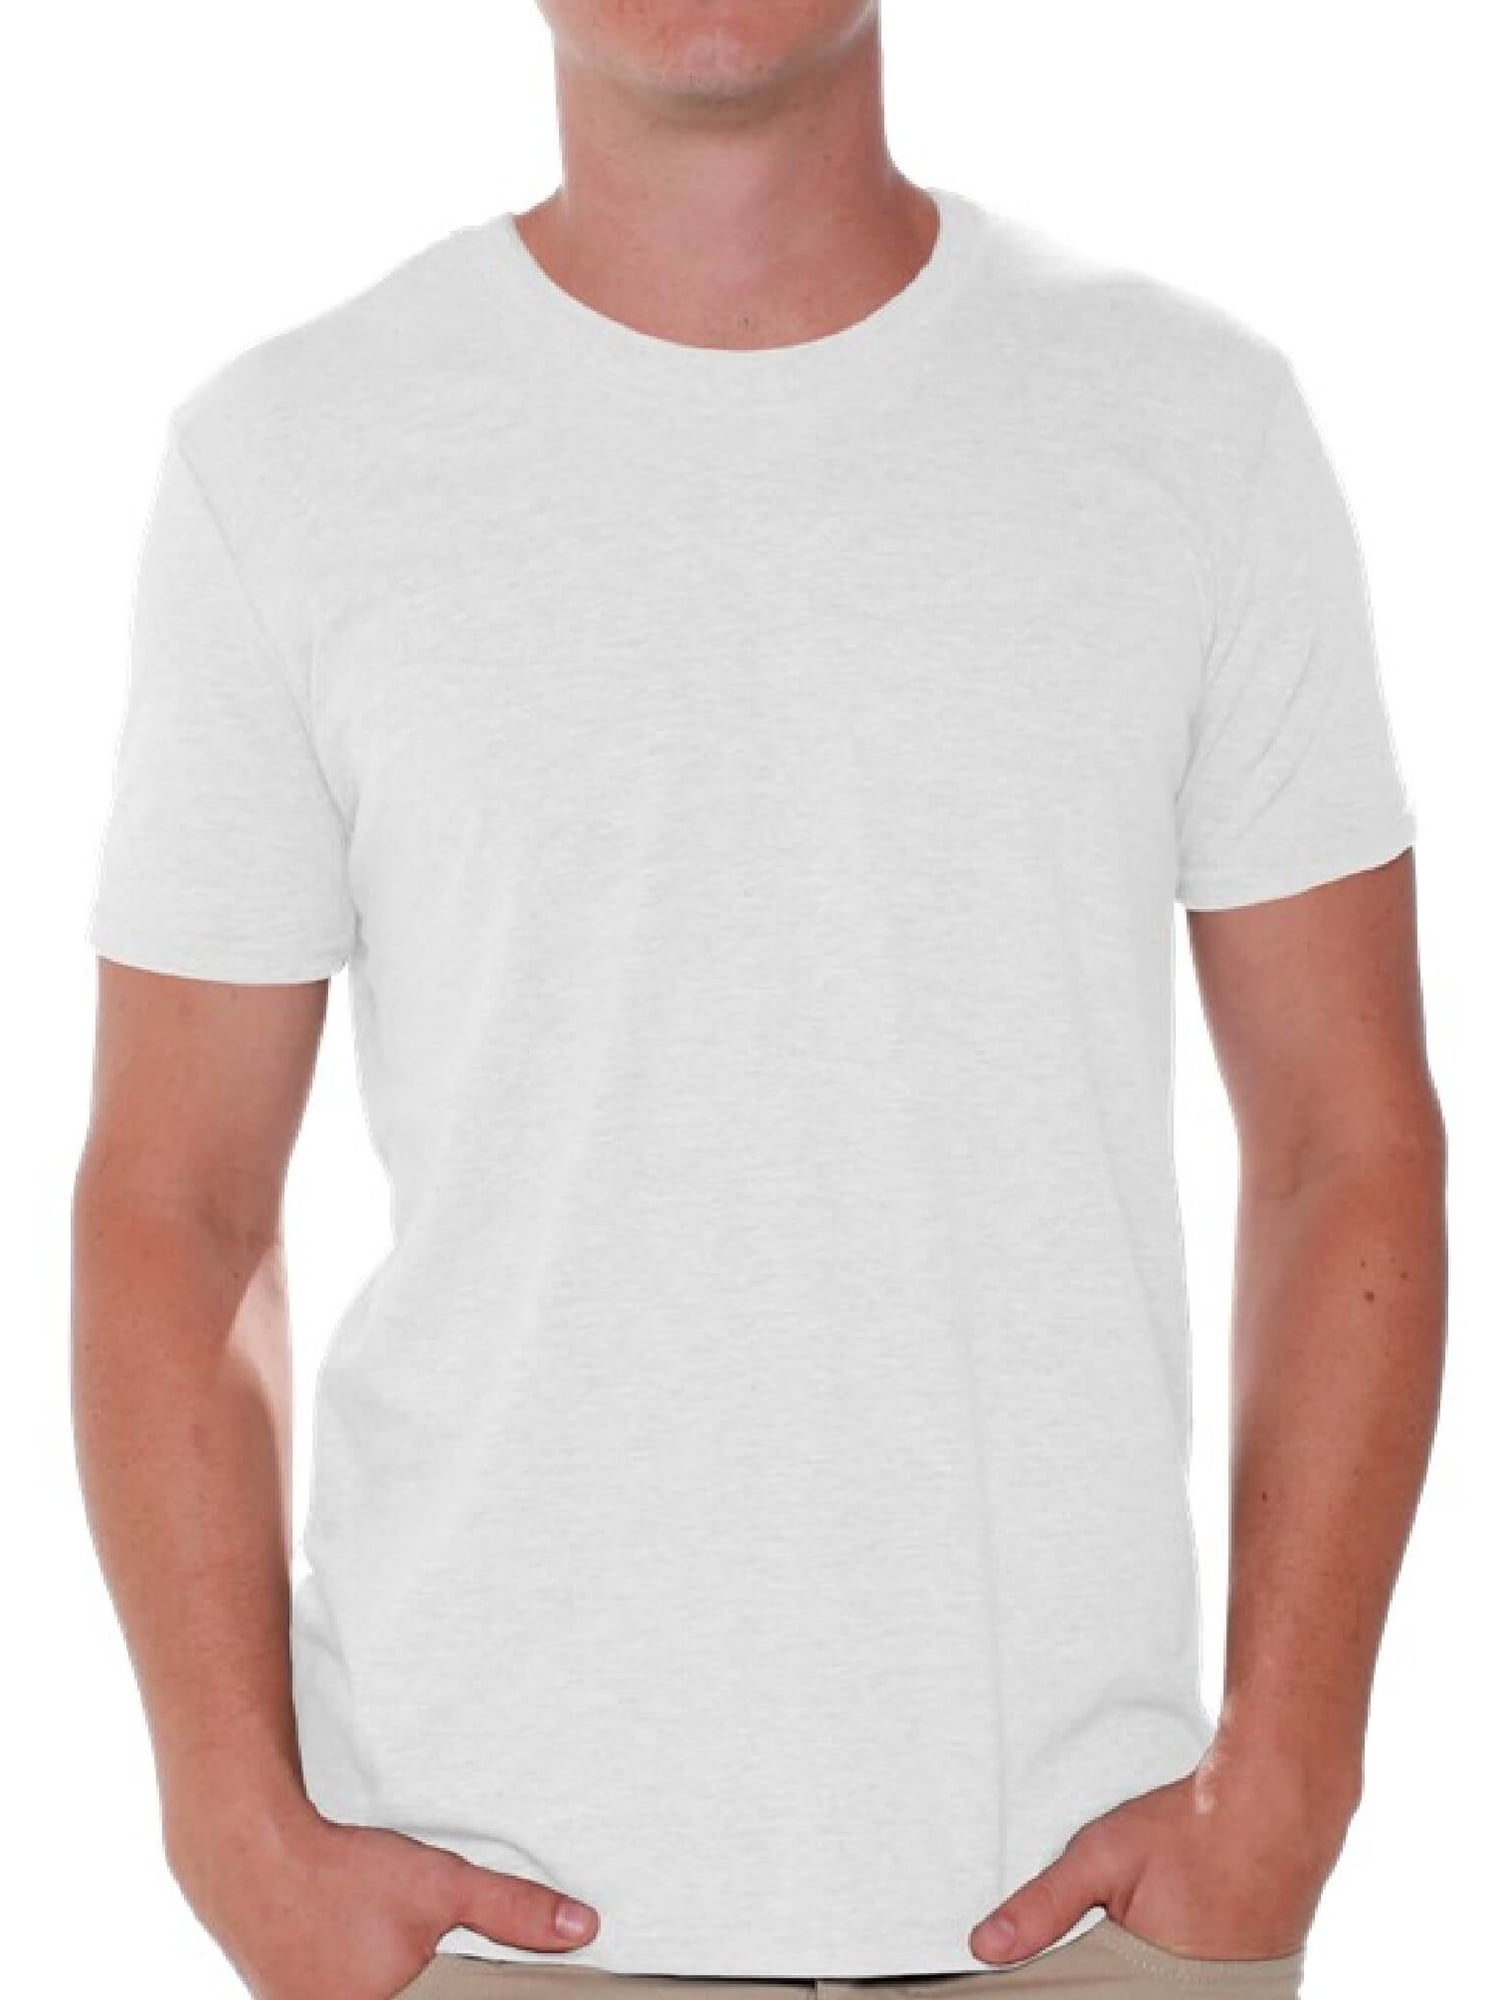 Gildan Shirt Cotton Men Shirts Mens Value Shirts Best Mens Classic Short Sleeve Blank All Color Black Shirts for Men White Shirt Grey Shirt - Walmart.com